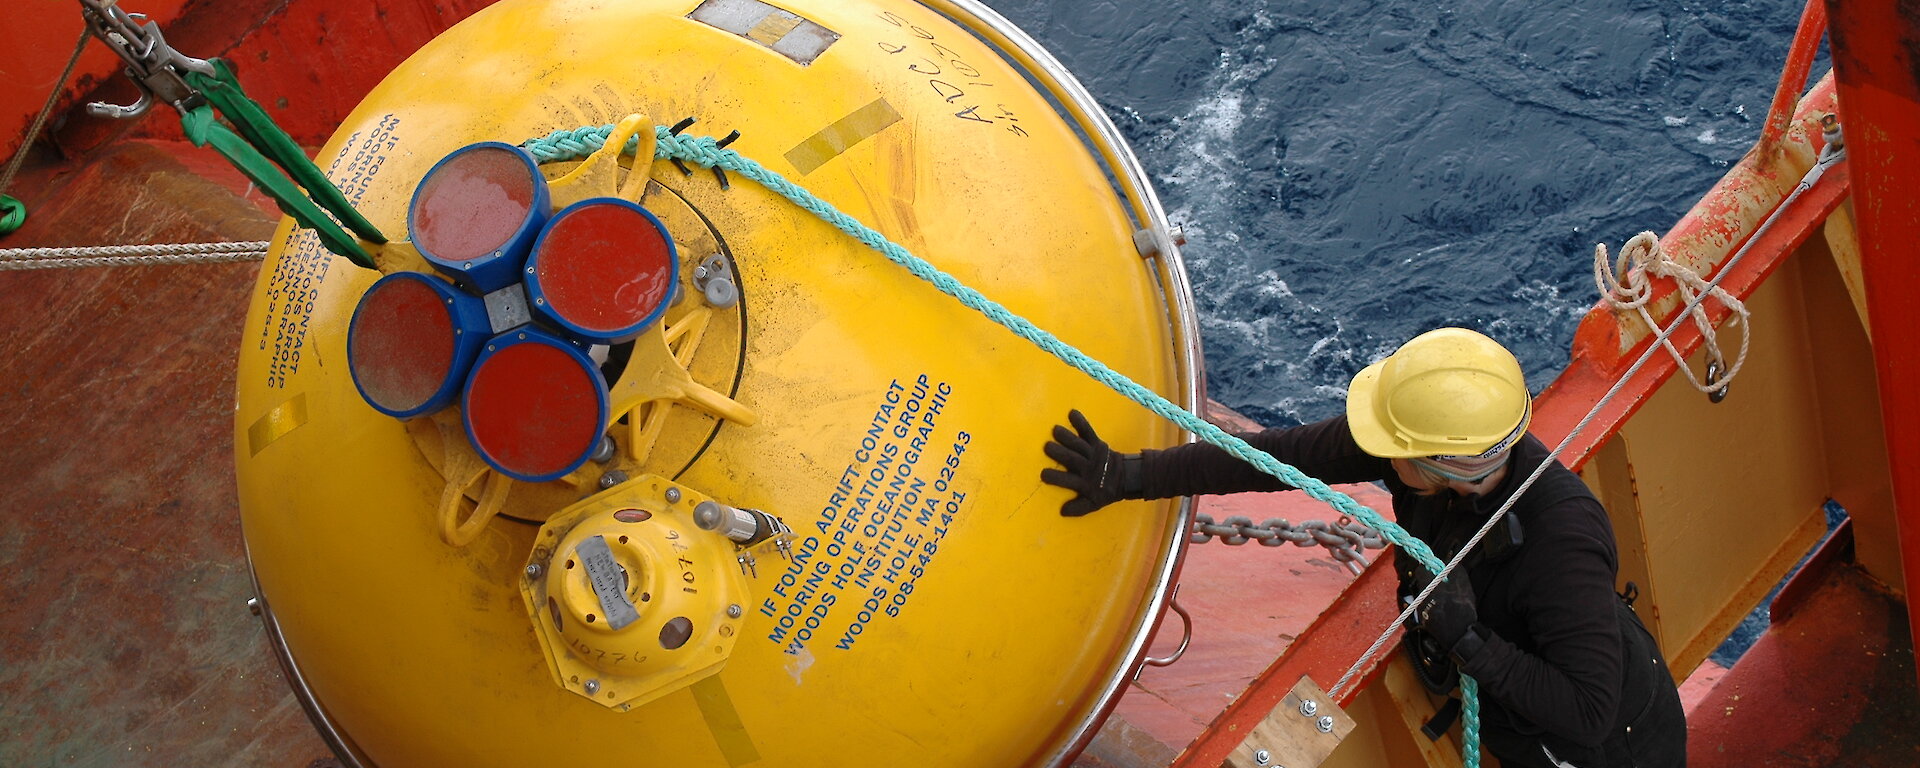 Part of an ocean mooring being deployed in the Southern Ocean.